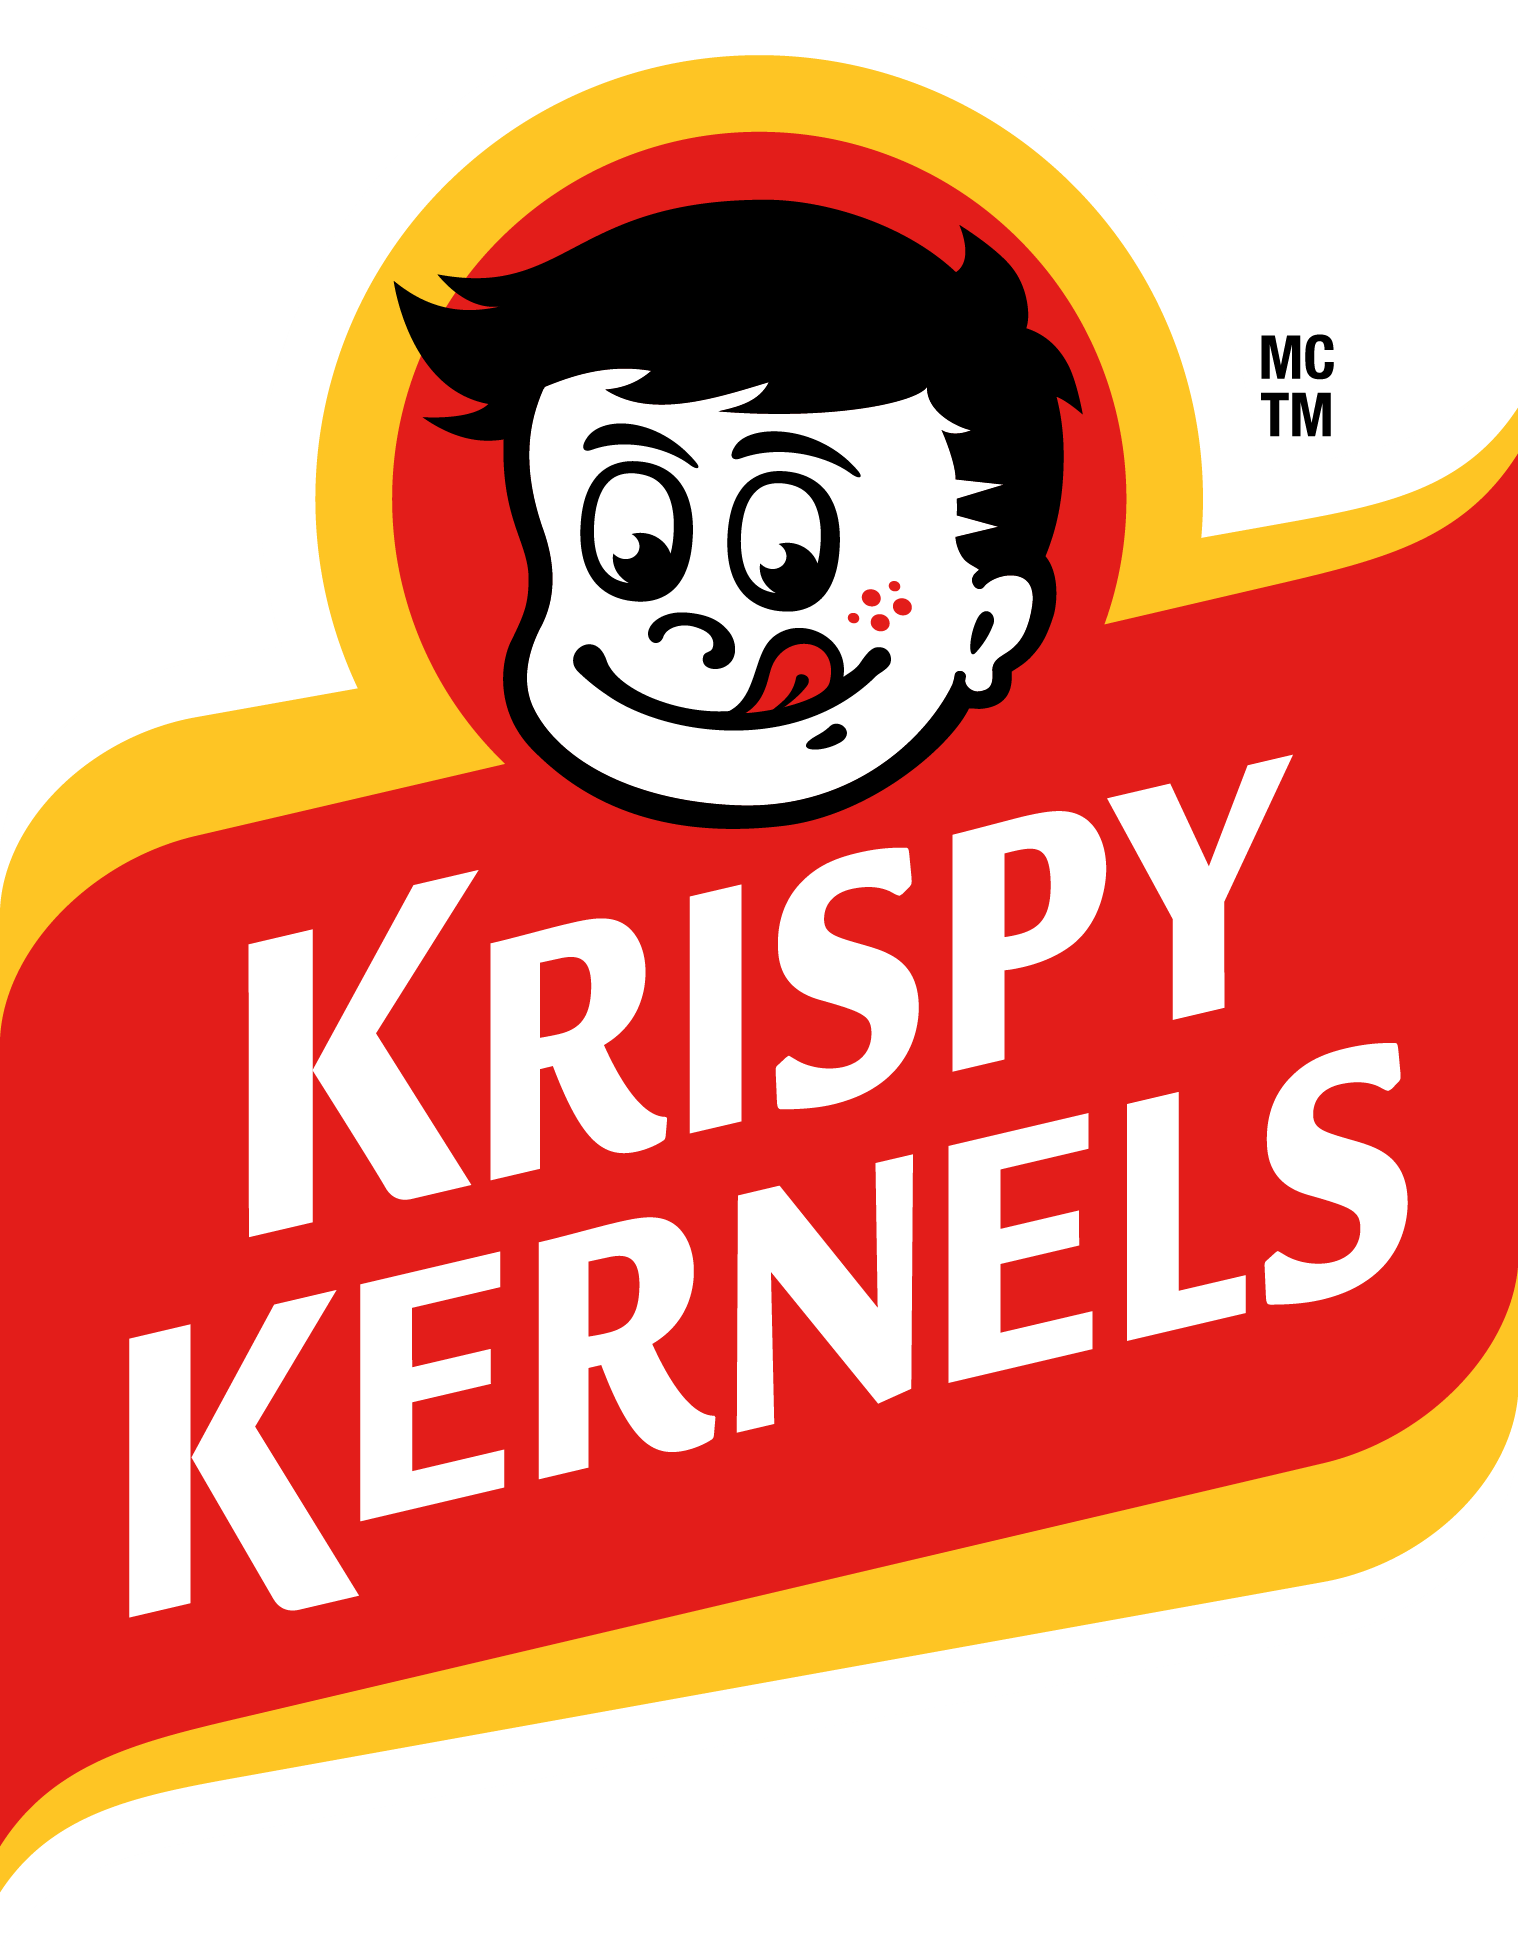 Krispy Kernels